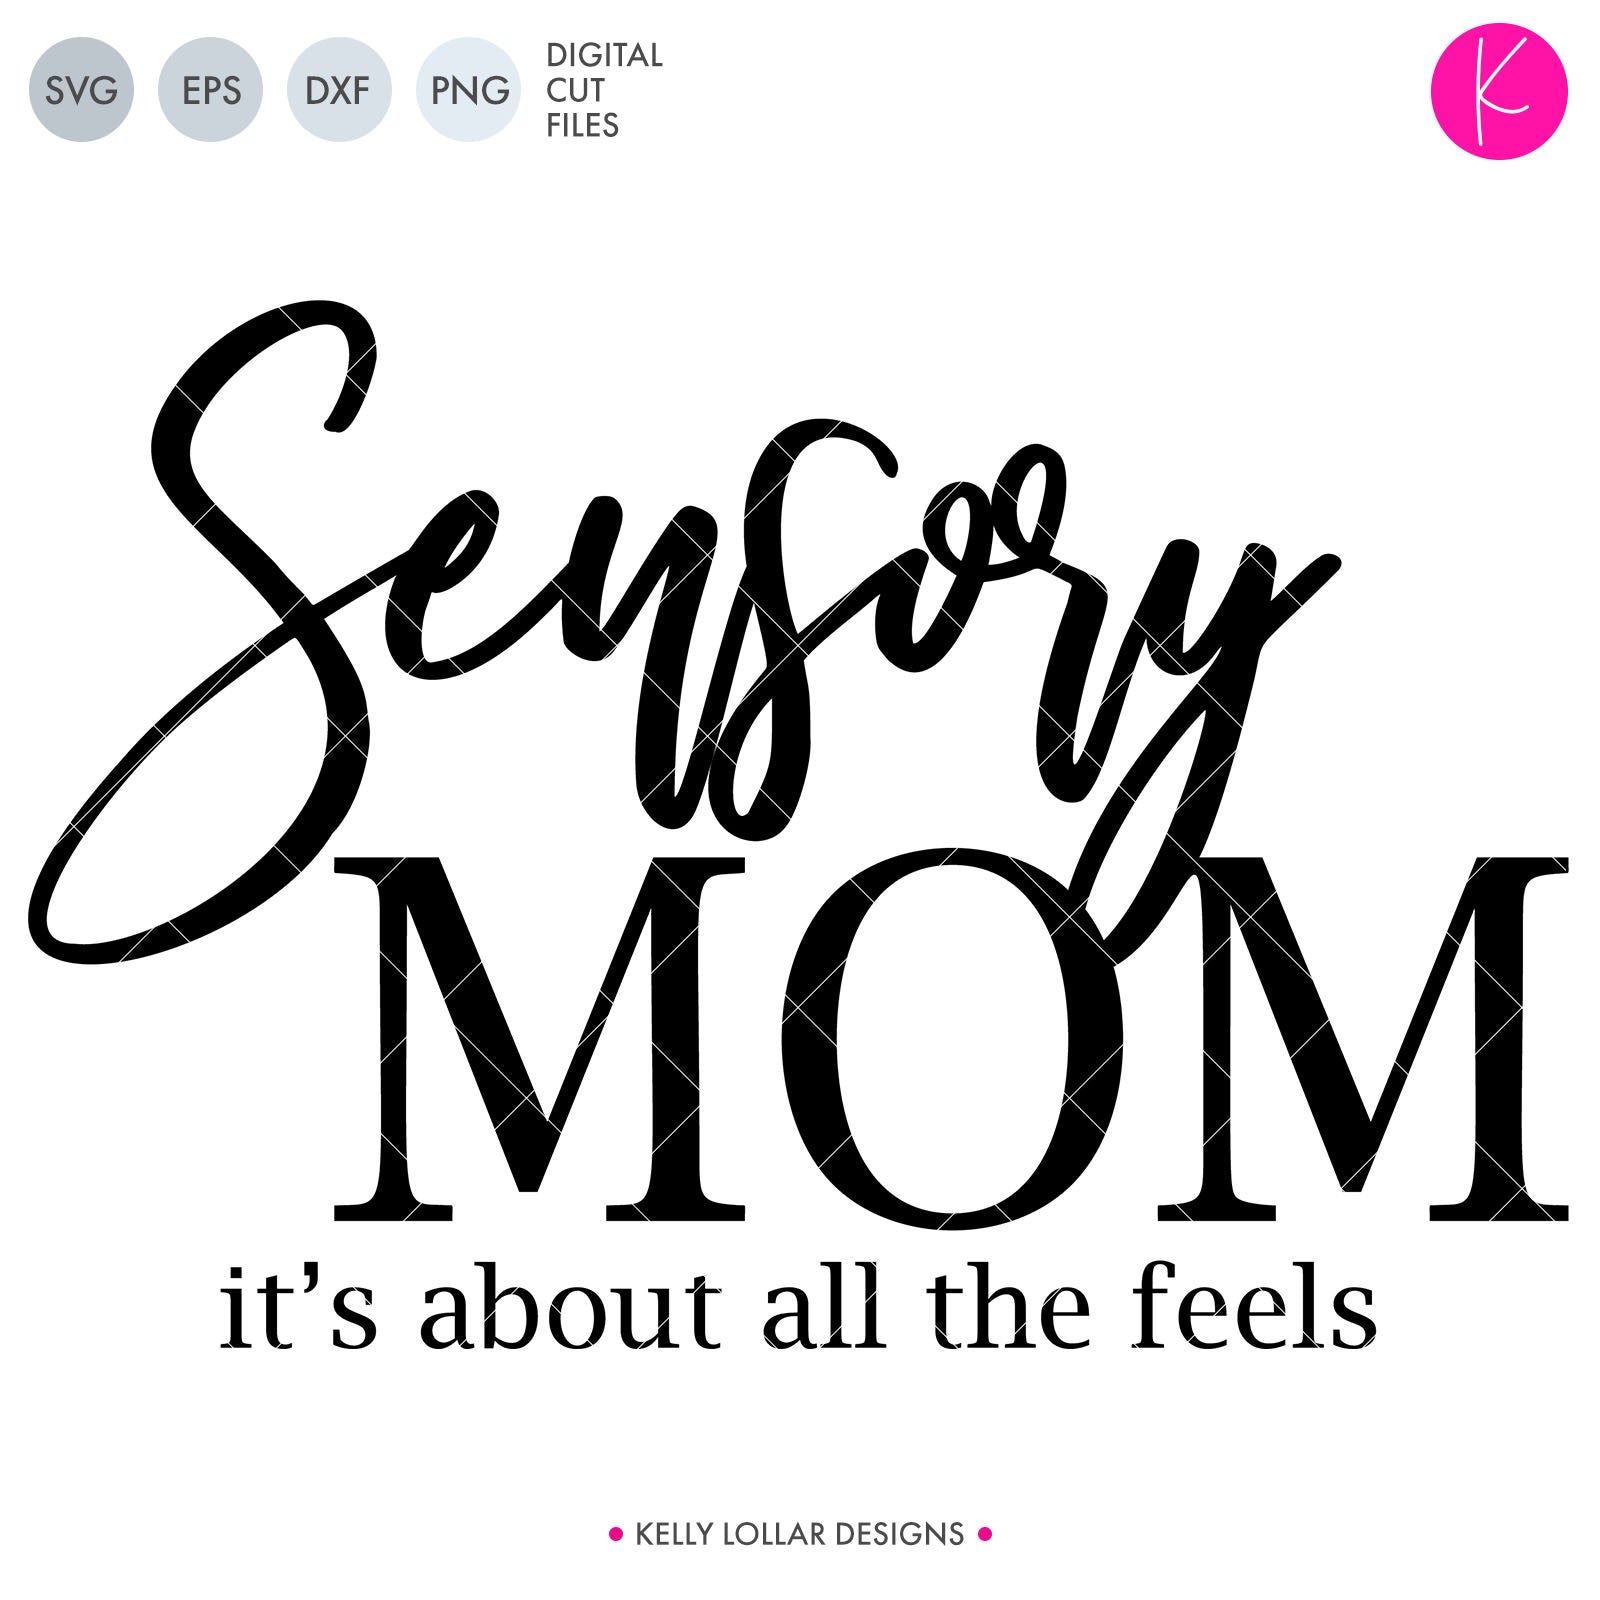 Download Sensory Mom SVG DXF EPS PNG Cut Files | Kelly Lollar Designs